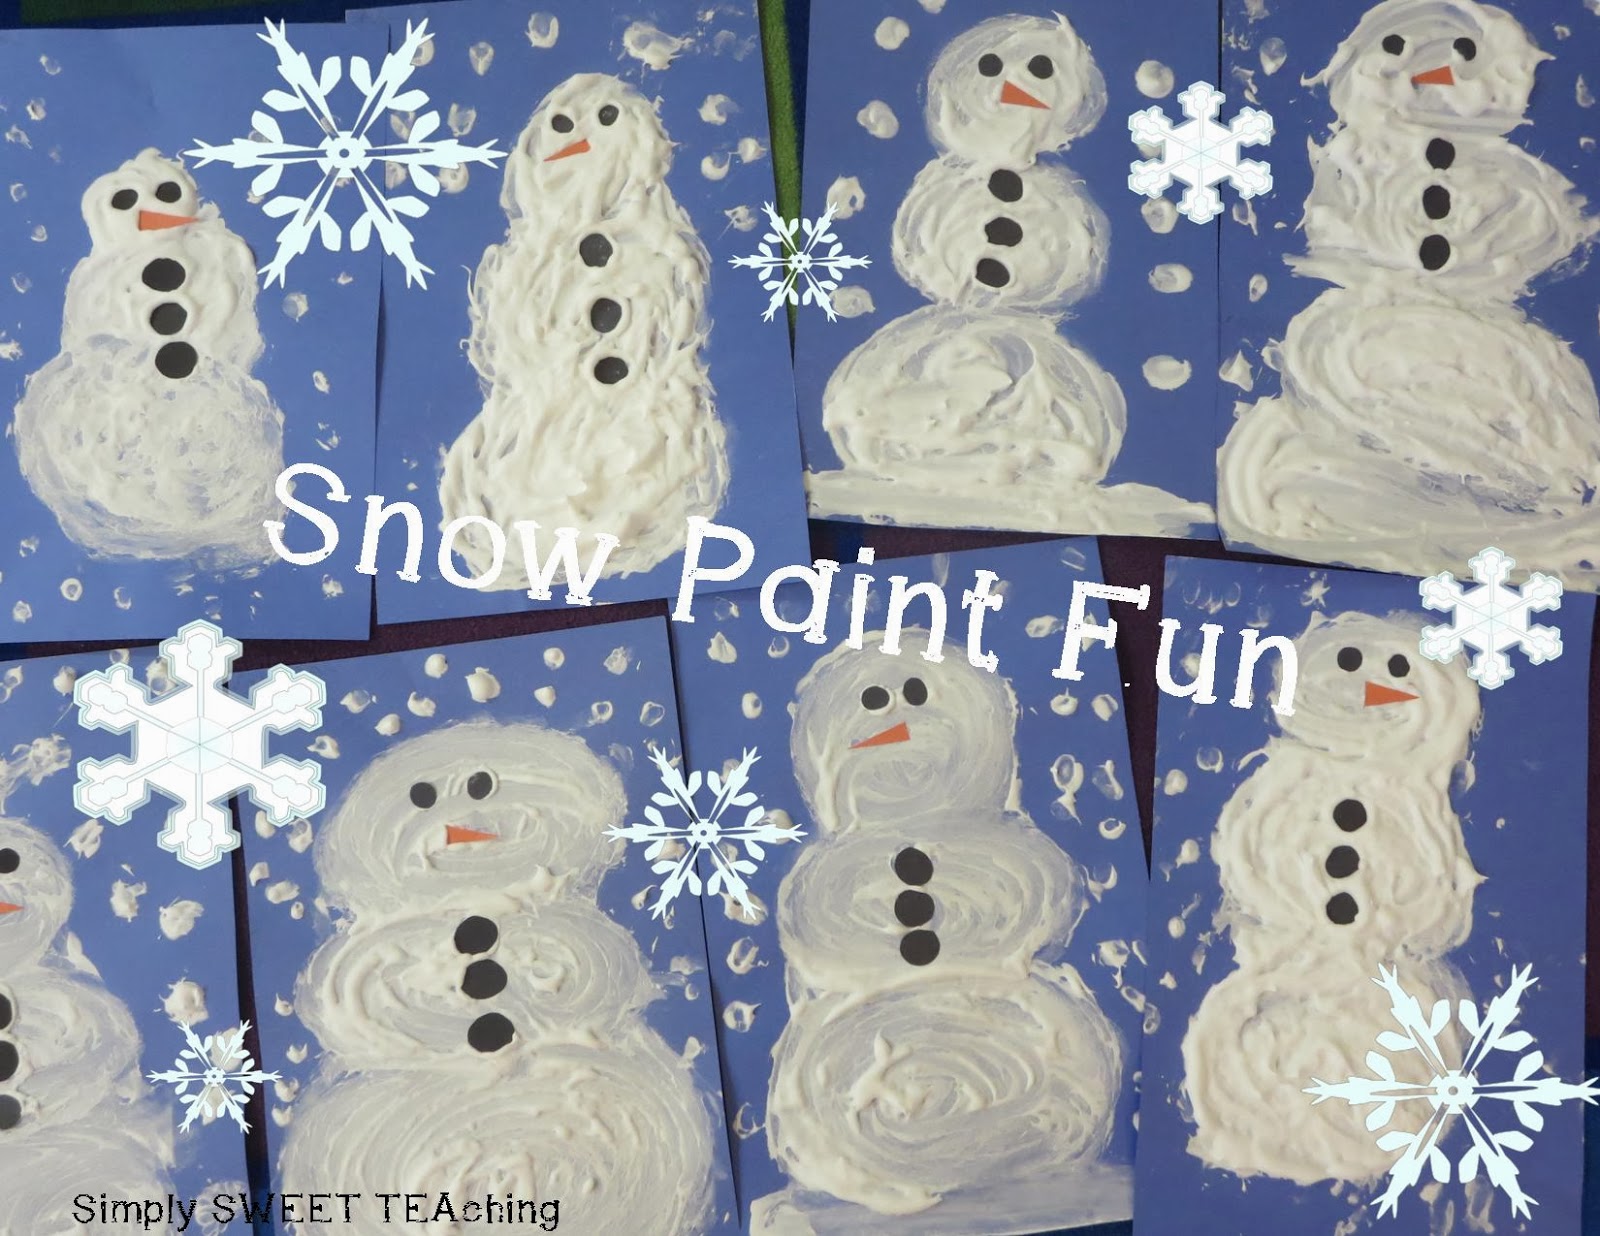 Snow Paint Recipe